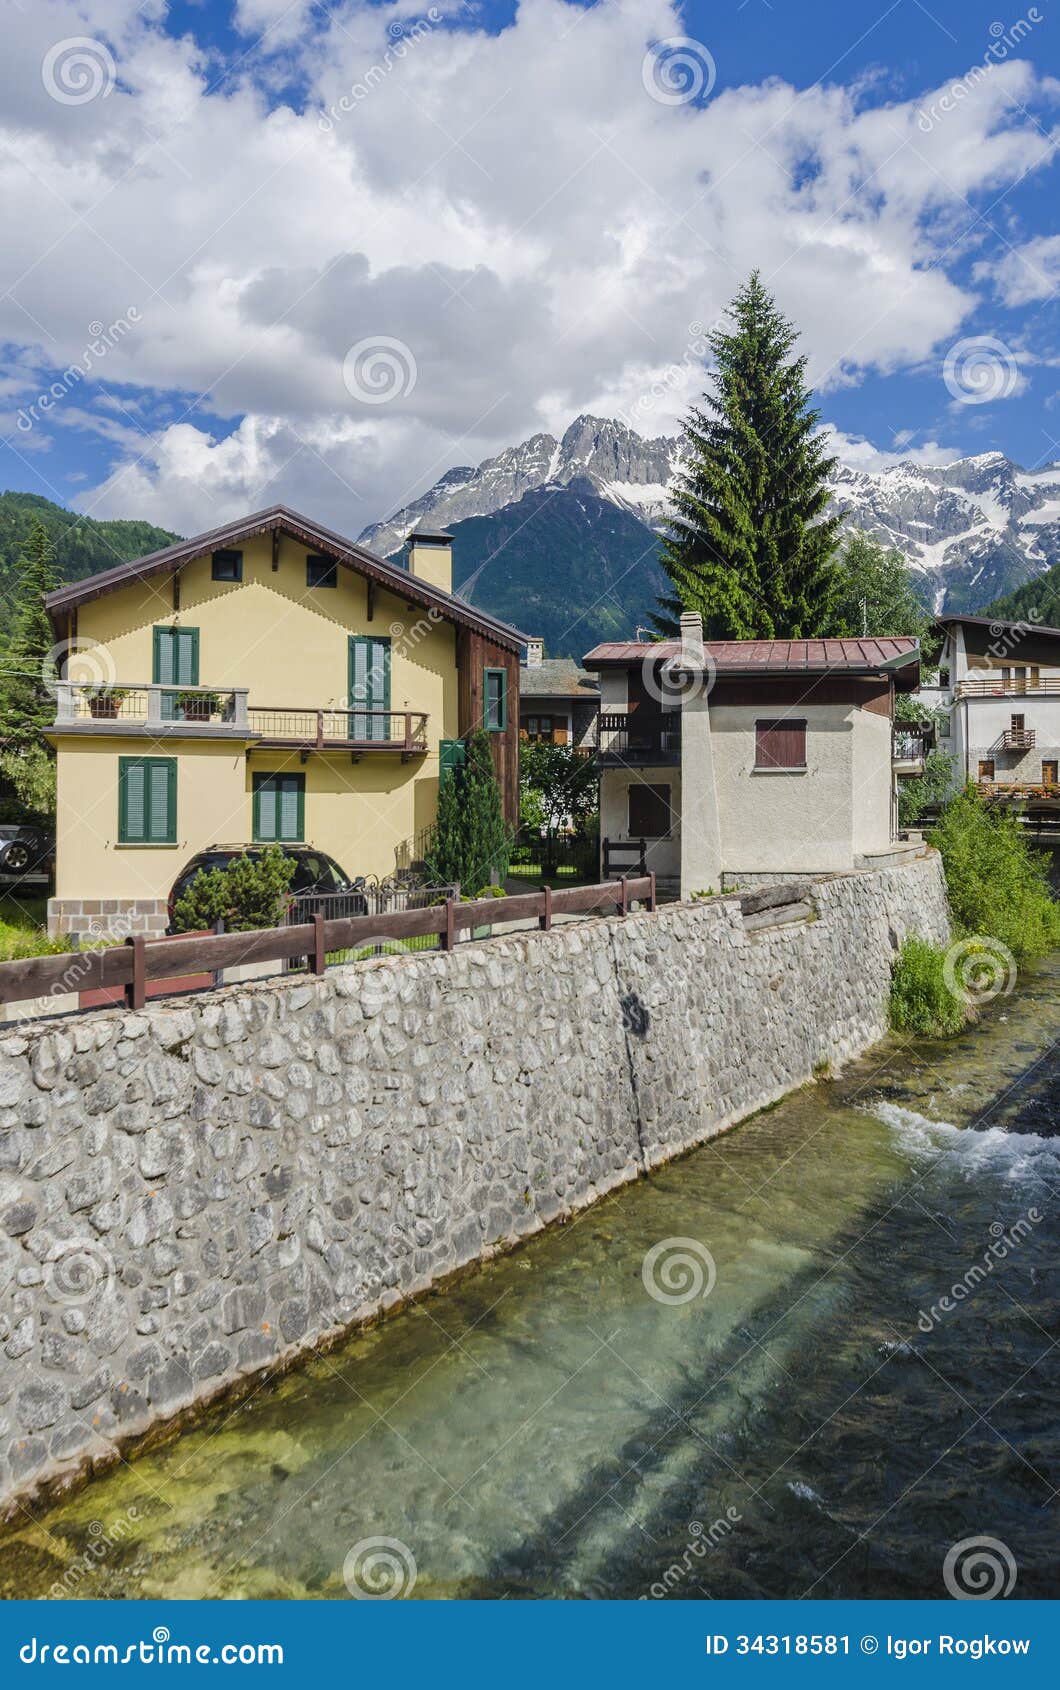 streets and houses in the mountain town of alpine italian ponte di legno region lombaridya brescia, northern italy